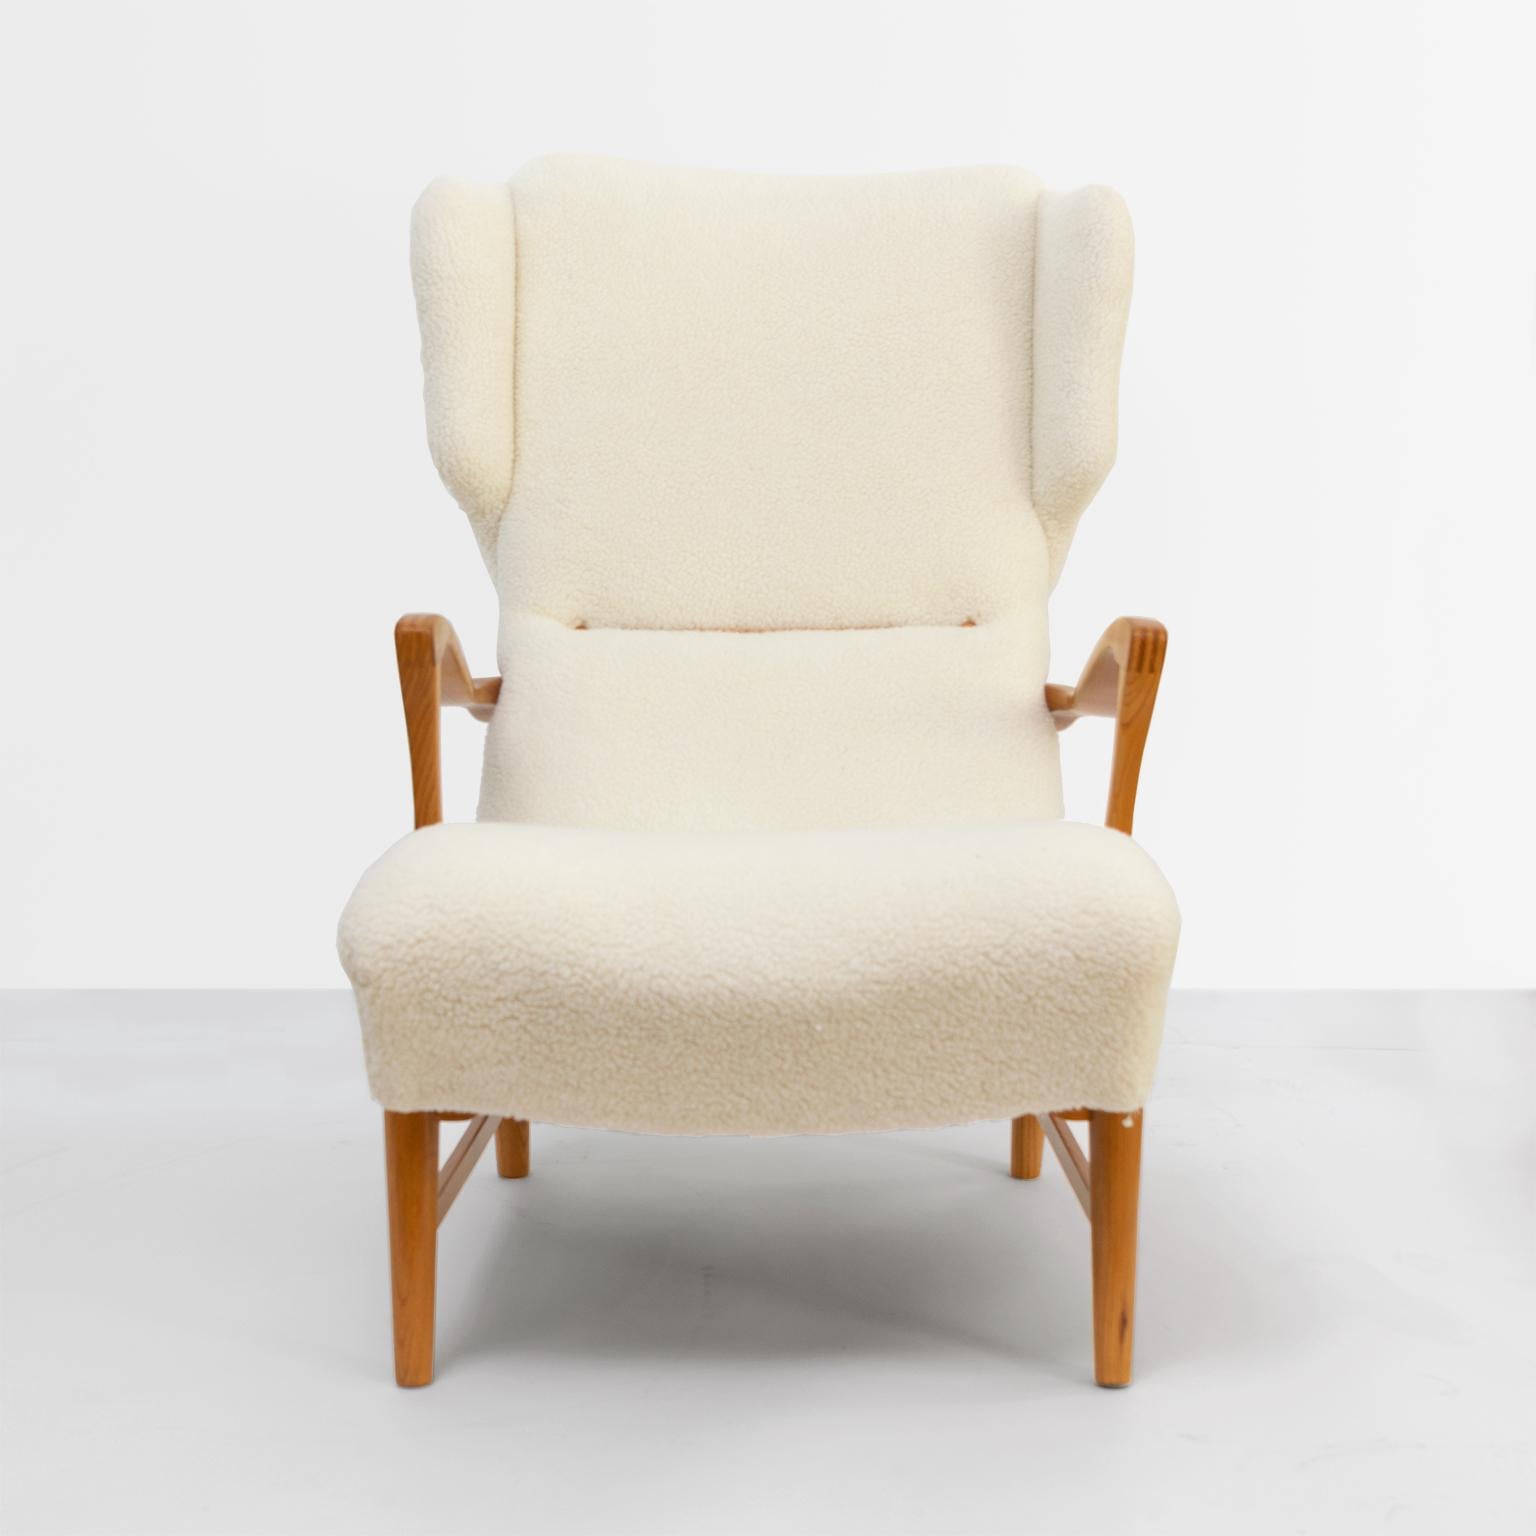 Carved Winged Back Scandinavian Modern Lounge Chair in Faux Sheepskin Fabric